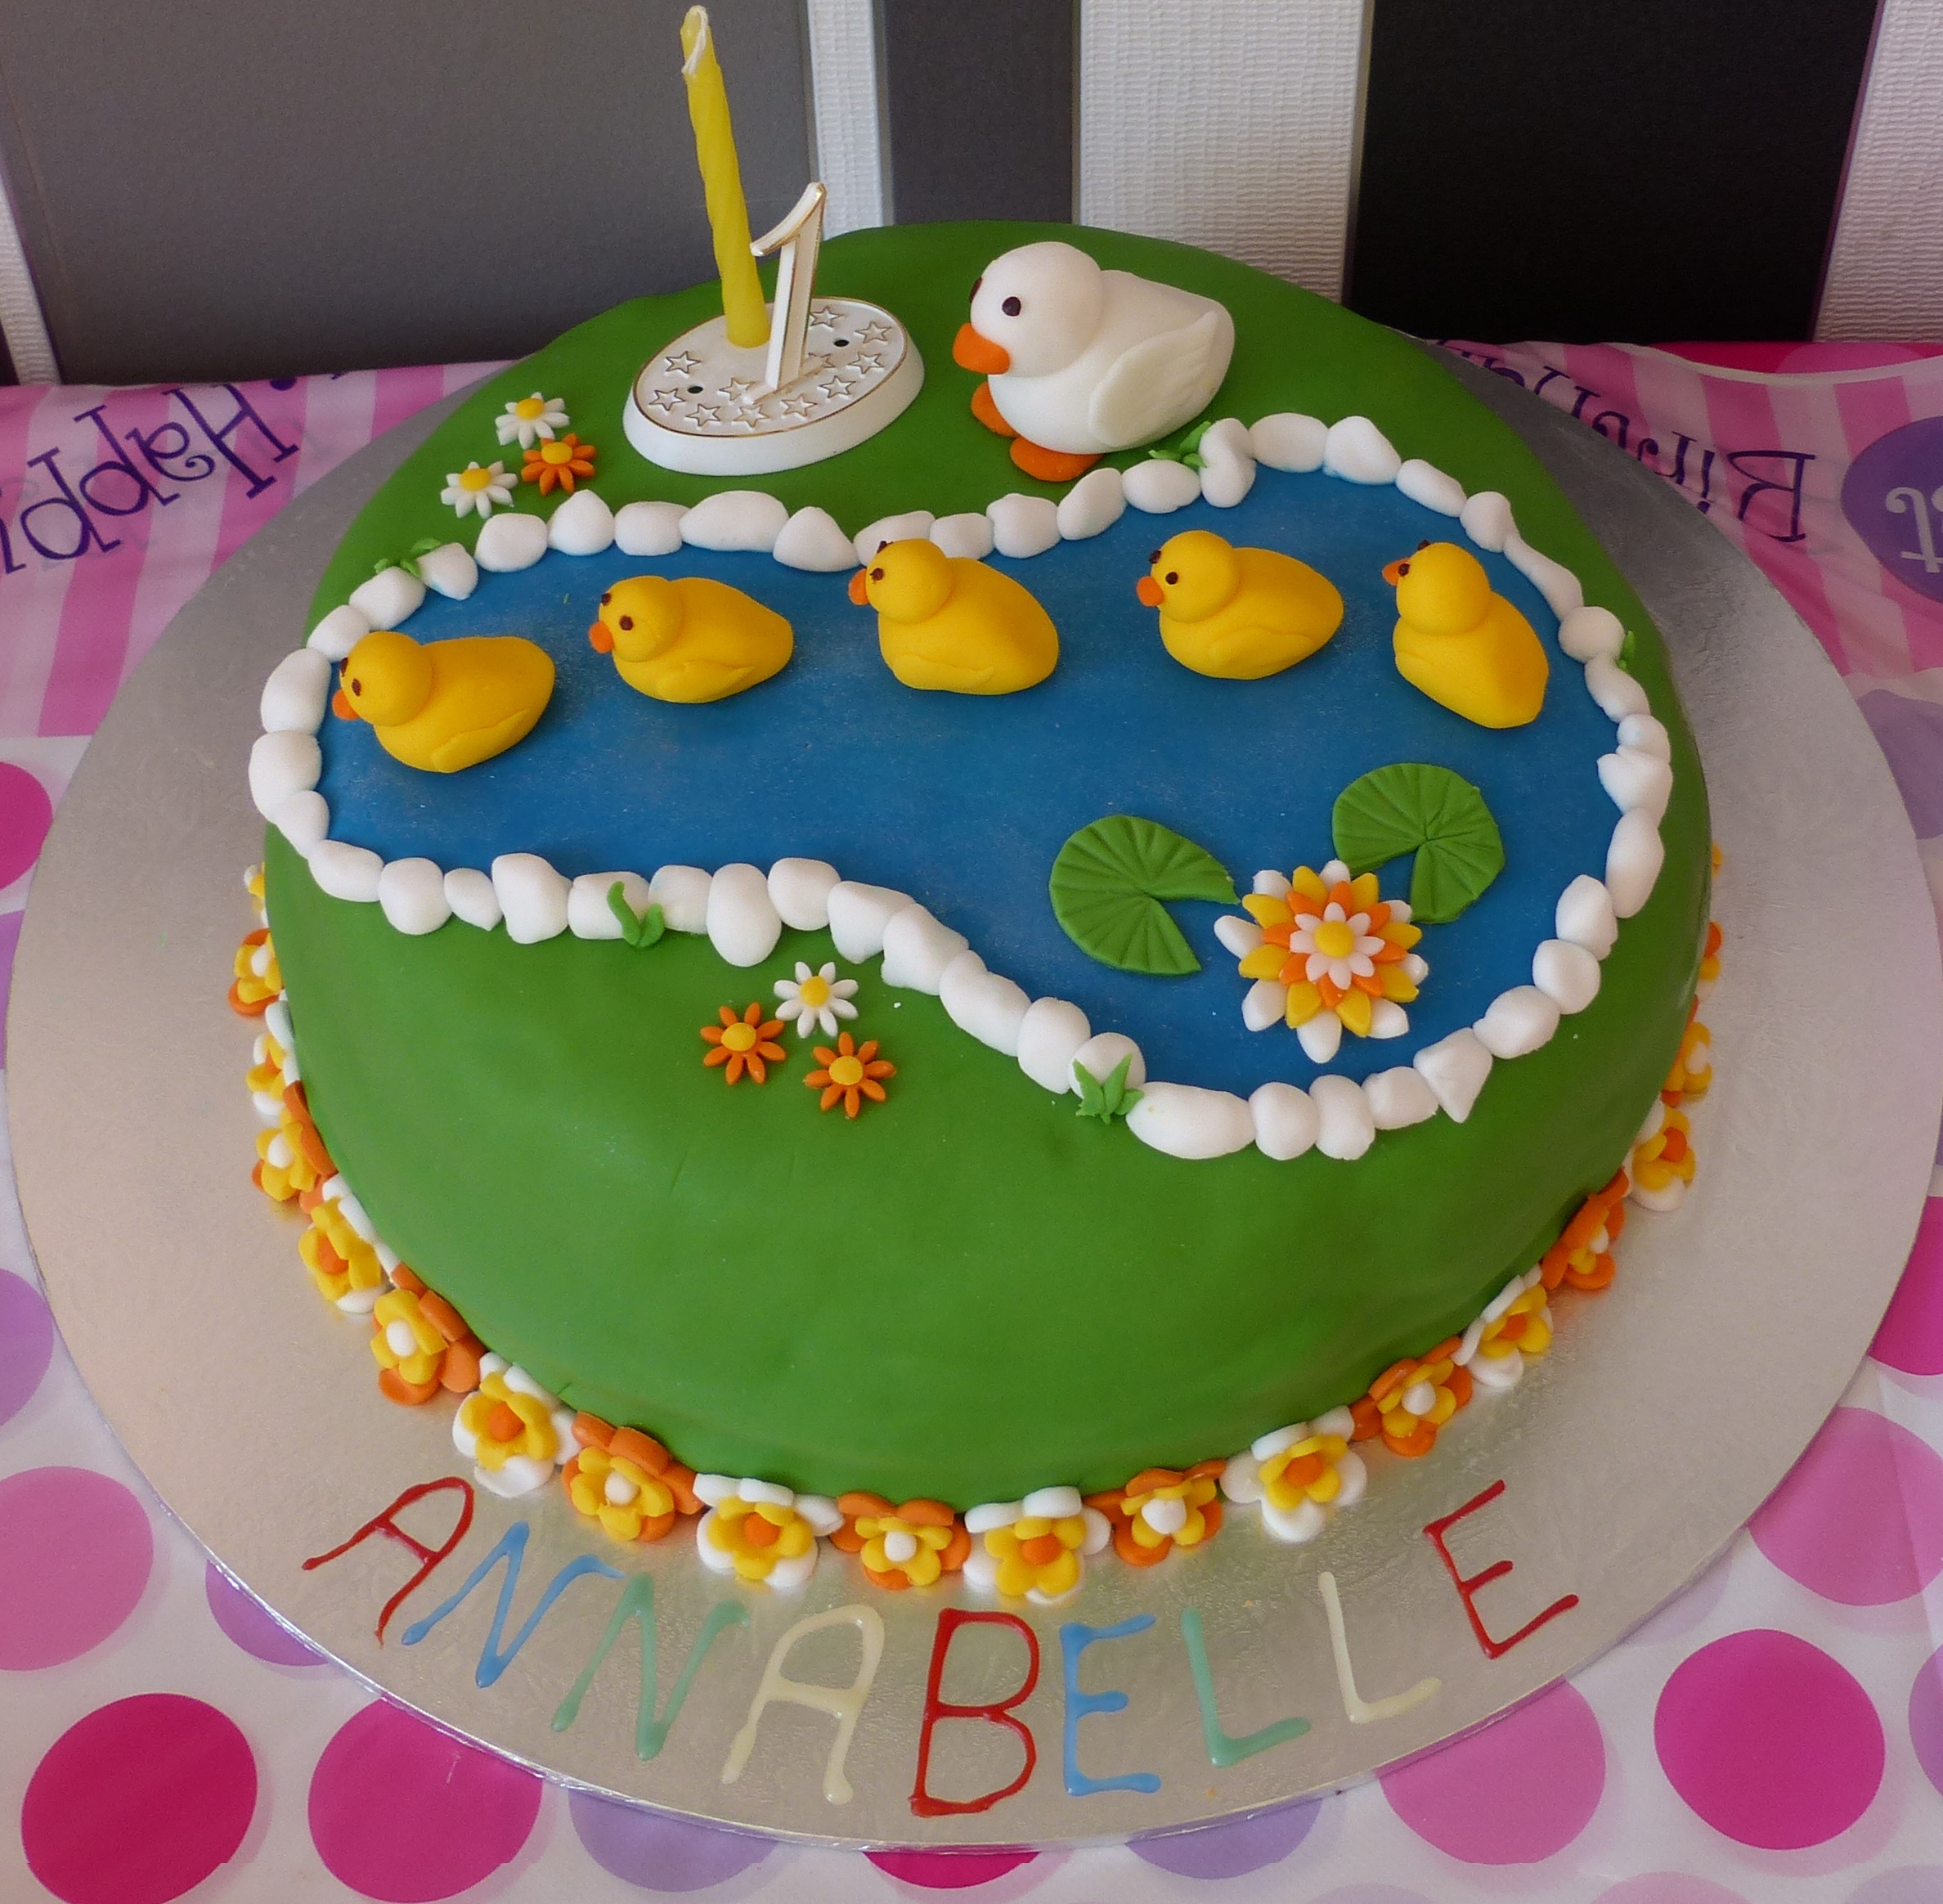 By Lore - Cake Design - Yellow duck 1st birthday cake. | Facebook